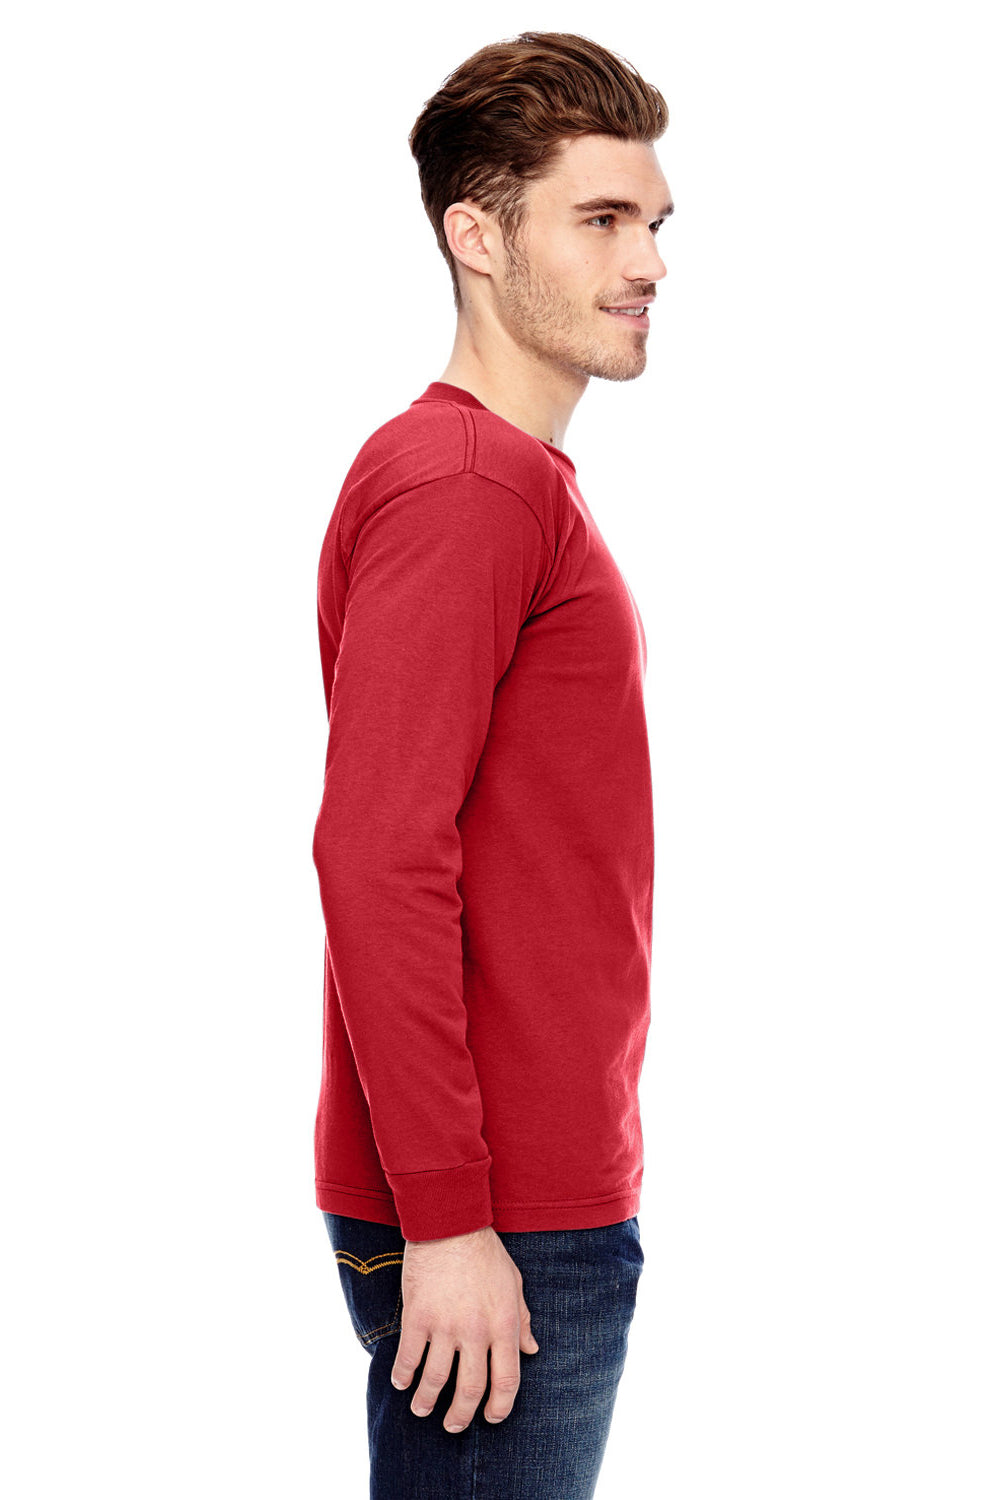 Bayside BA6100 Mens USA Made Long Sleeve Crewneck T-Shirt Red Model Side